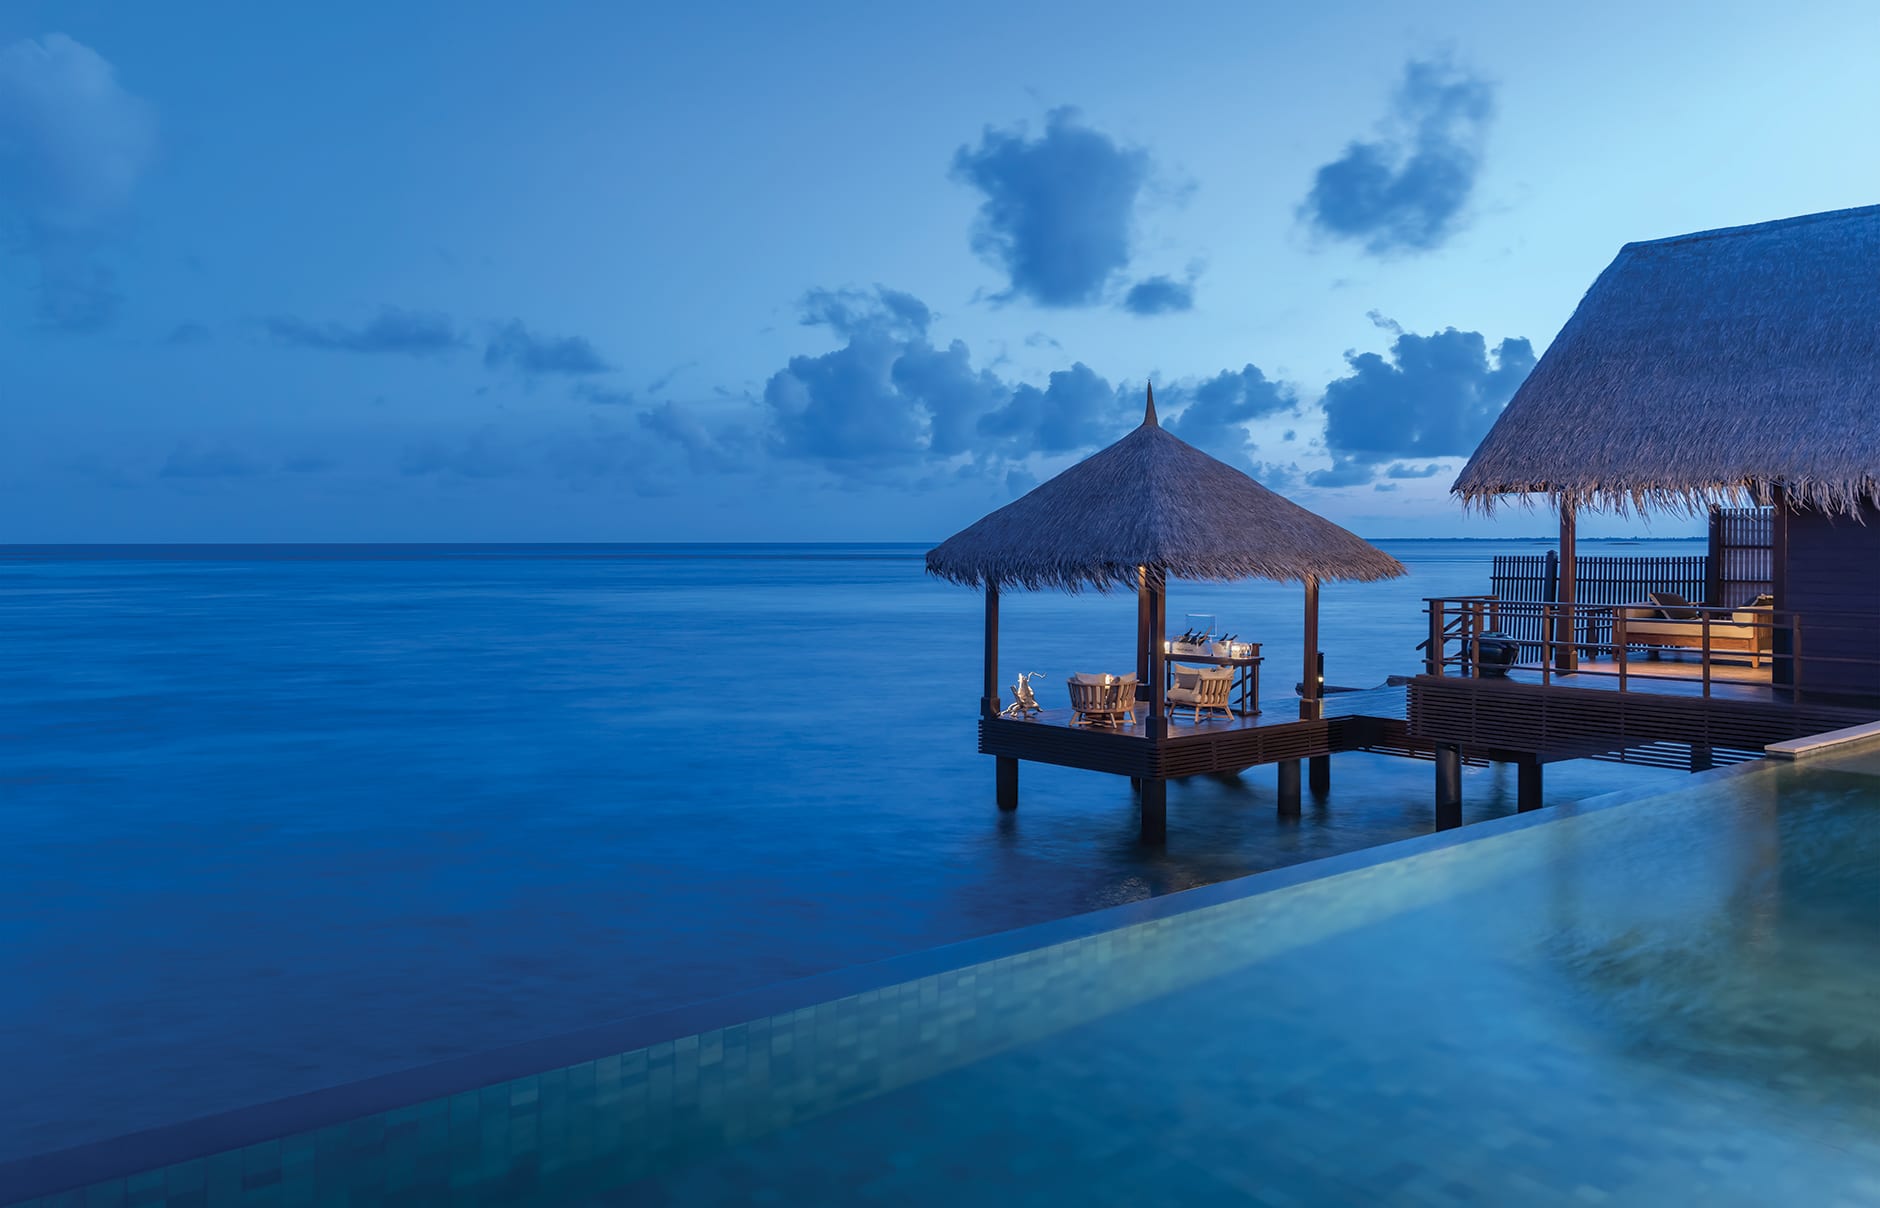 Shangri-La's Villingili Resort and Spa, Maldives. Hotel Review by TravelPlusStyle. Photo © Shangri-La Hotels and Resorts